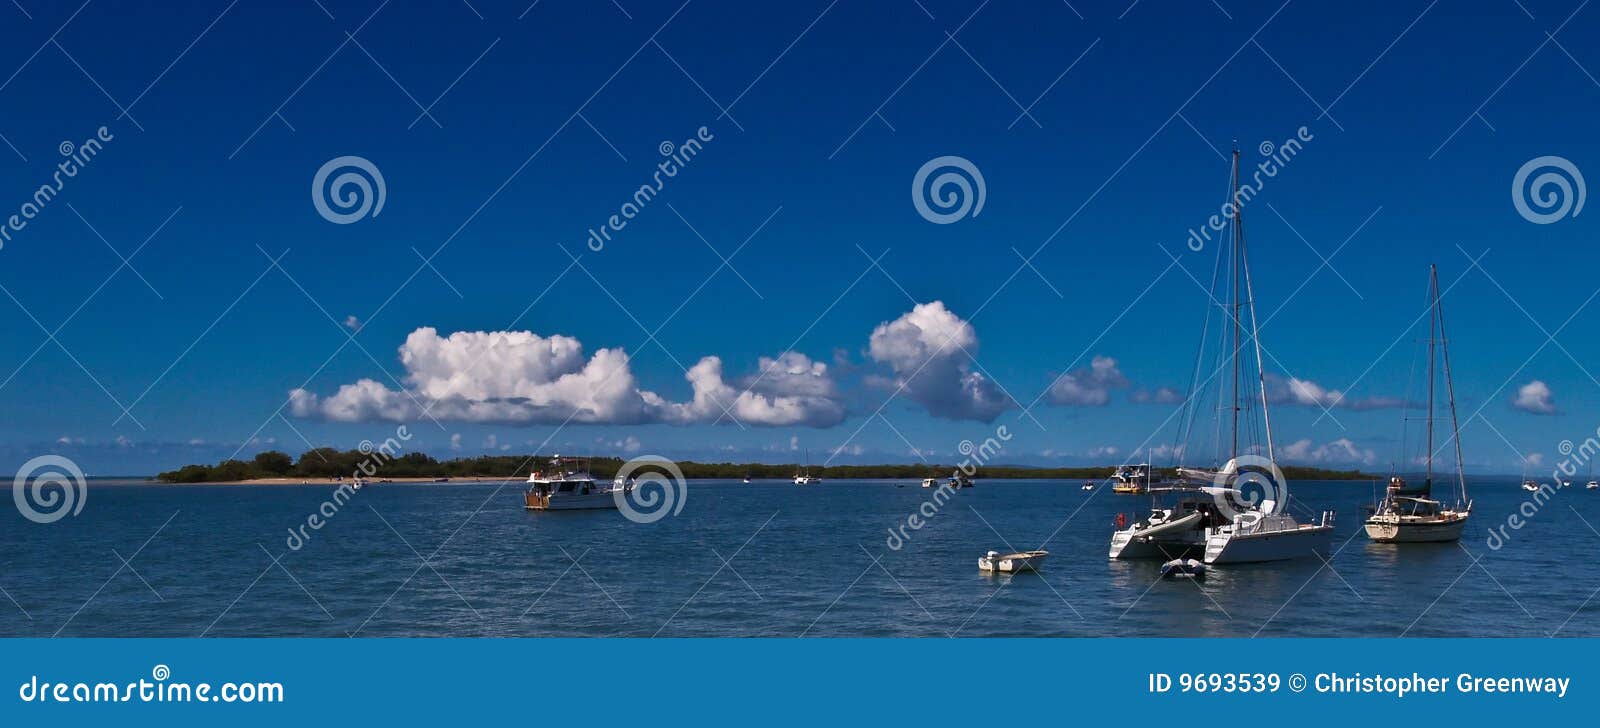 moored boats around island